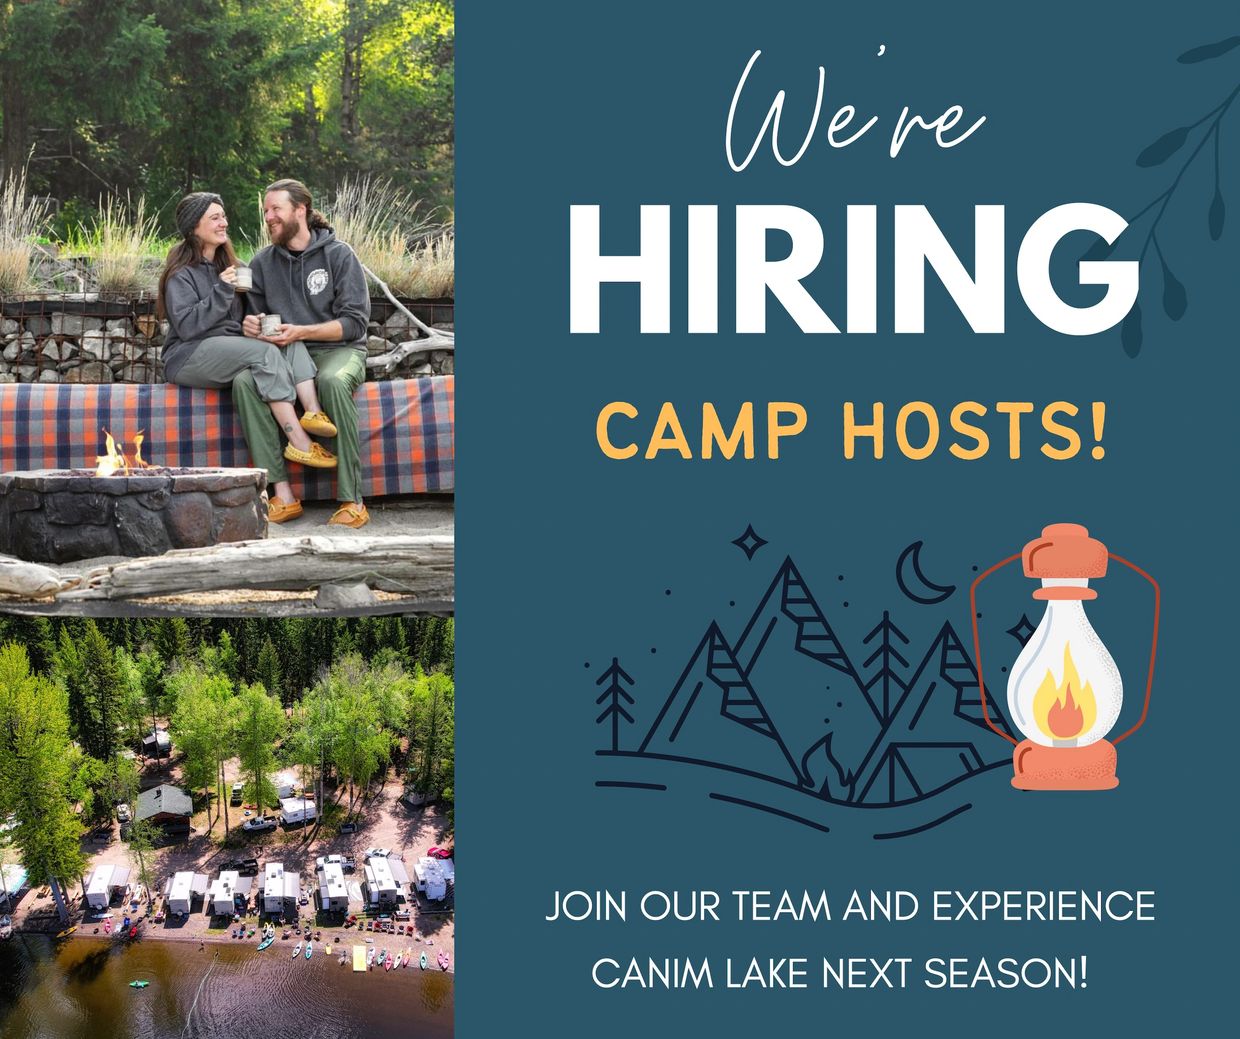 Camp hosts canim lake south point resort